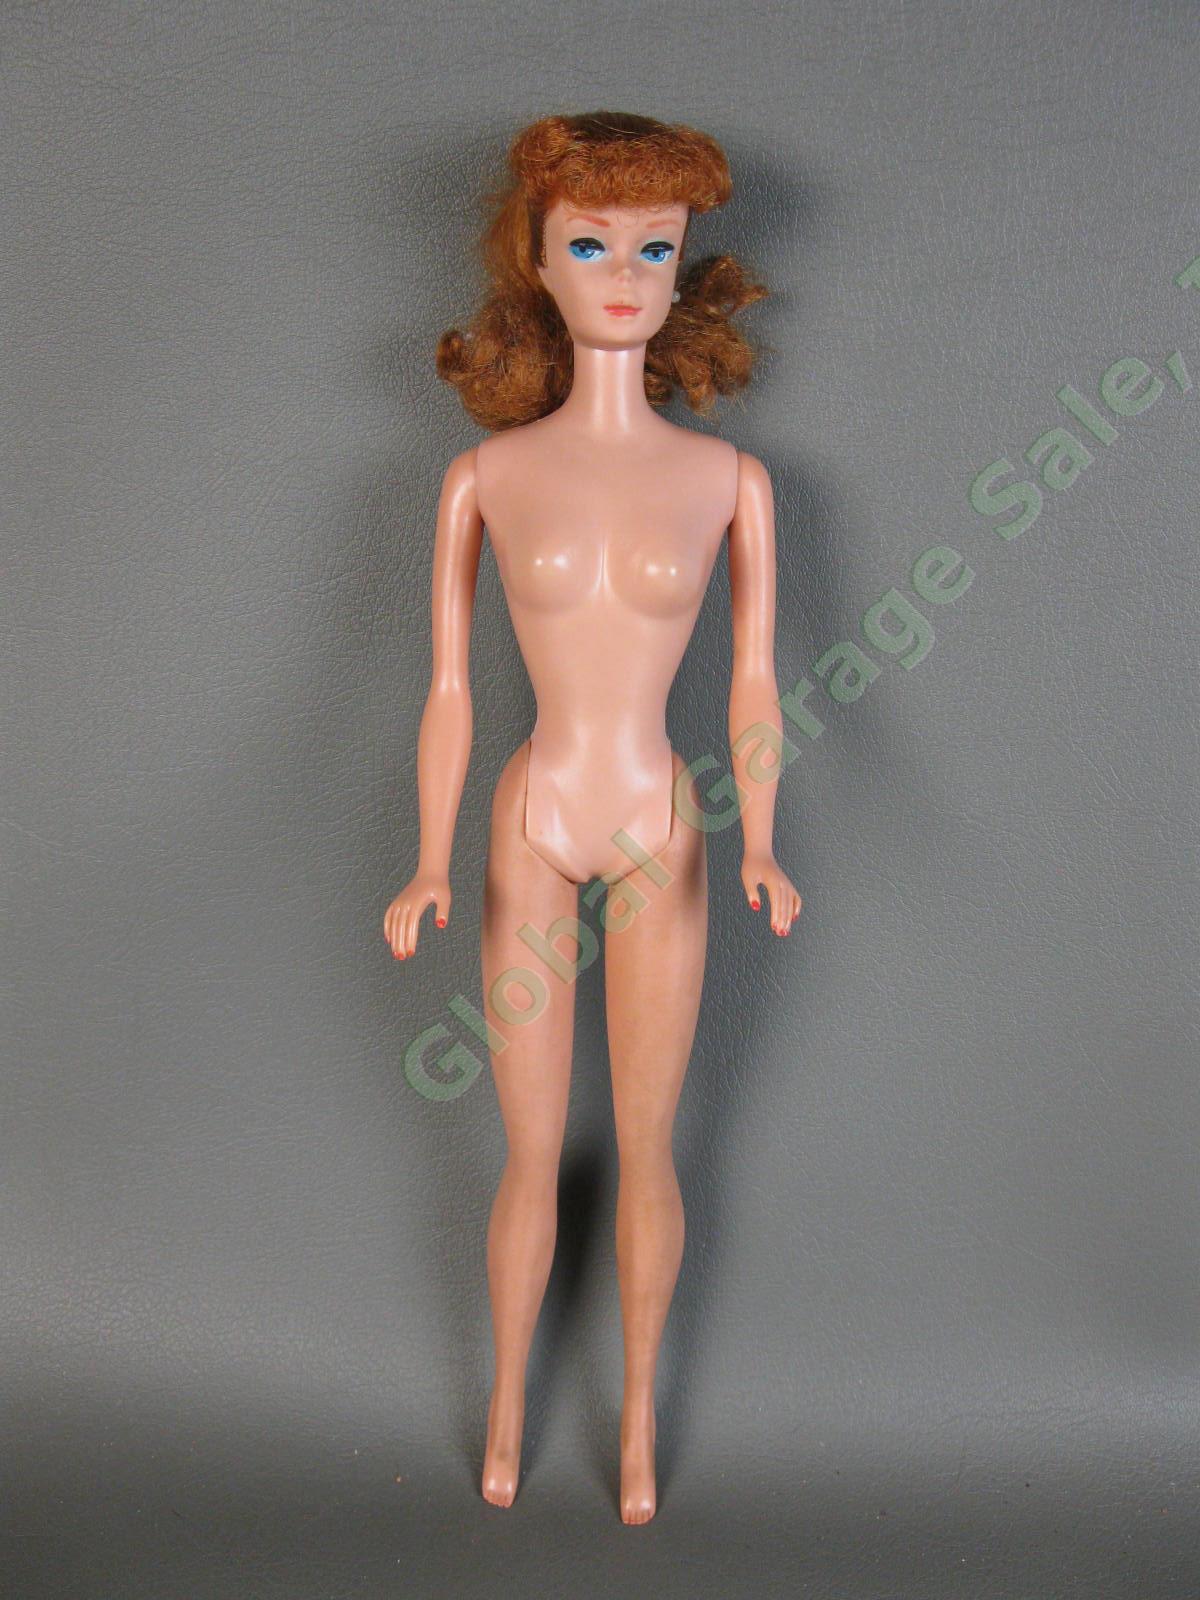 Original VTG Mattel 1962 Redhead Titan Ponytail Barbie Doll #6 850 JAPAN Case NR 3